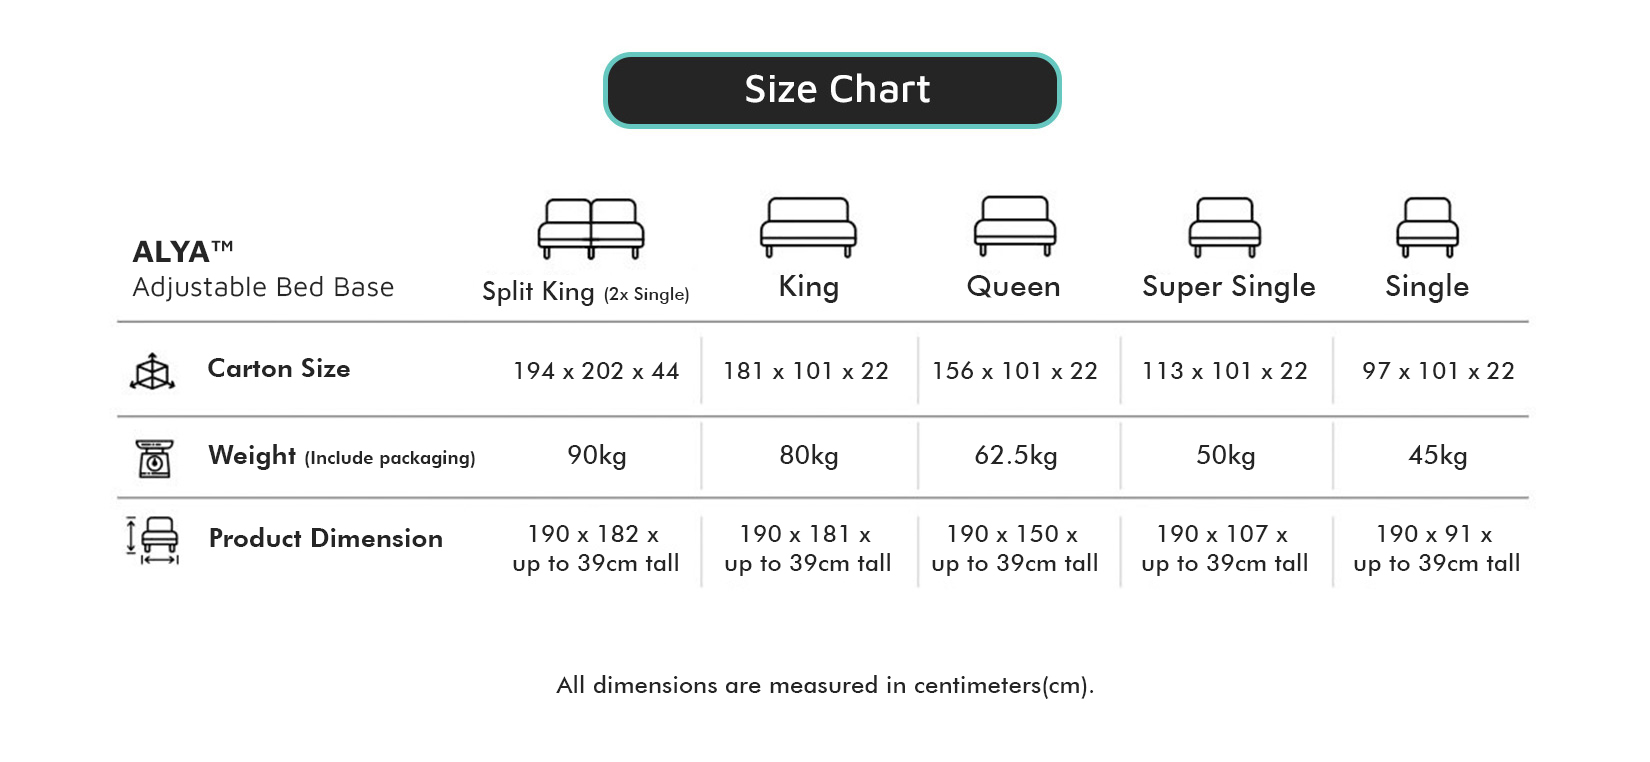 alya-adjustable-bed-base-1-size-chart.jpg